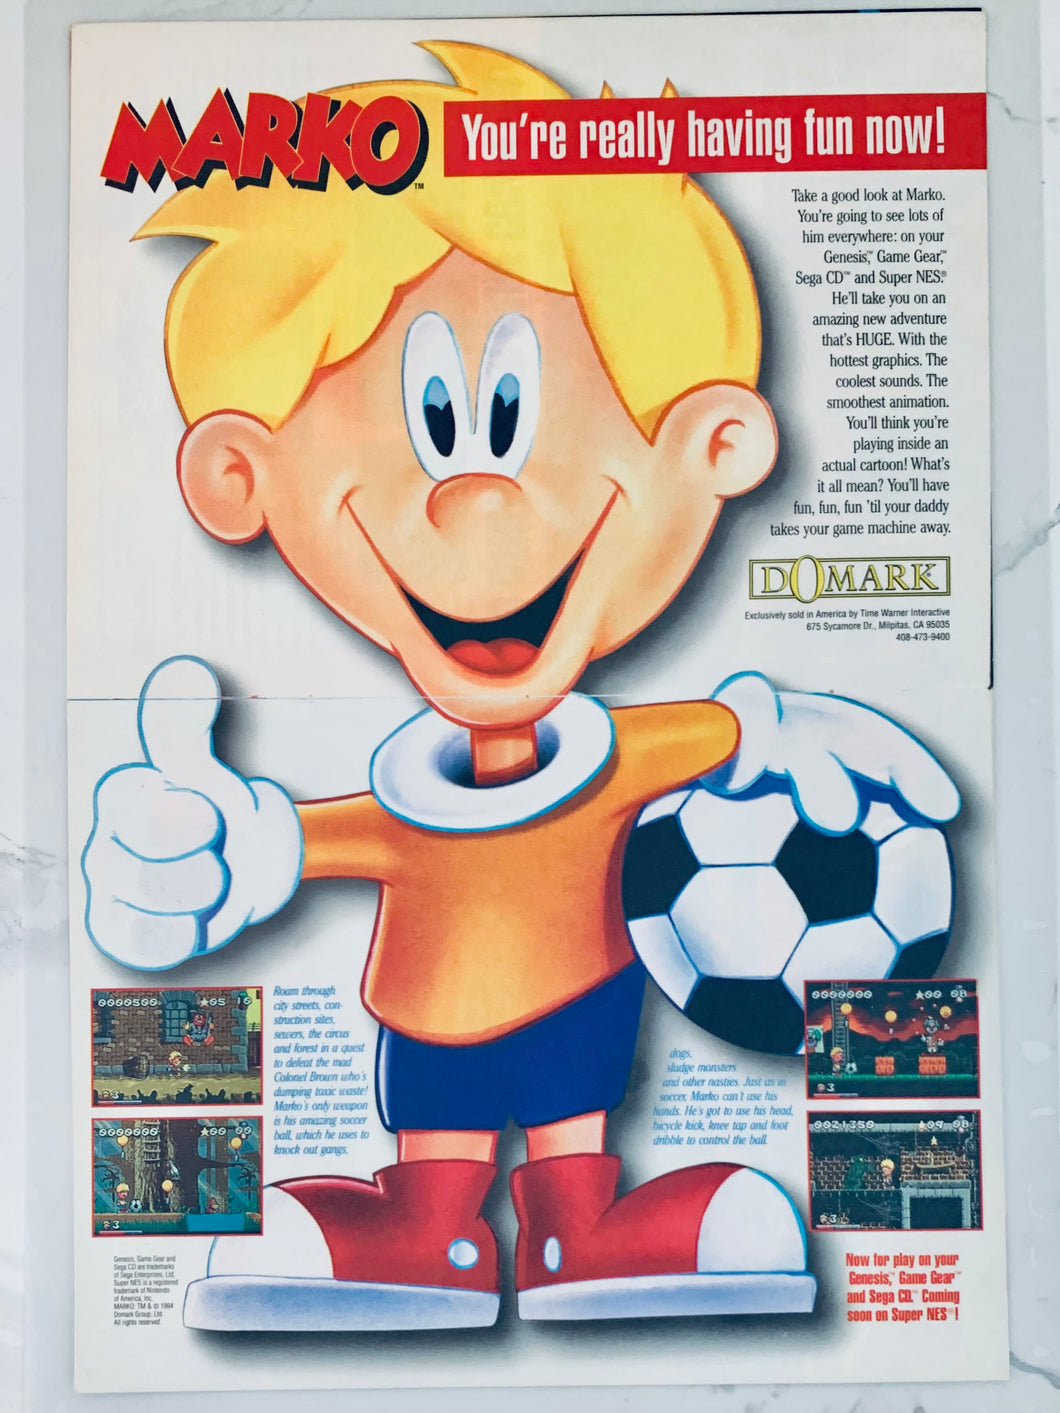 Marko - SNES SEGA Genesis CD Game Gear - Original Vintage Advertisement - Print Ads - Laminated A3 Poster